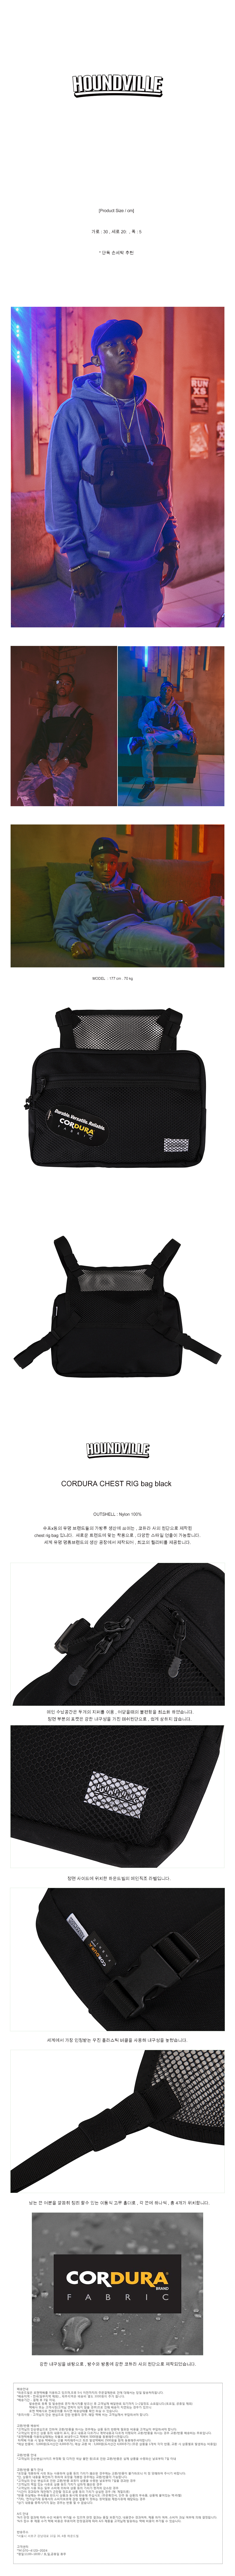 CORDURA chest rig bag black.jpg